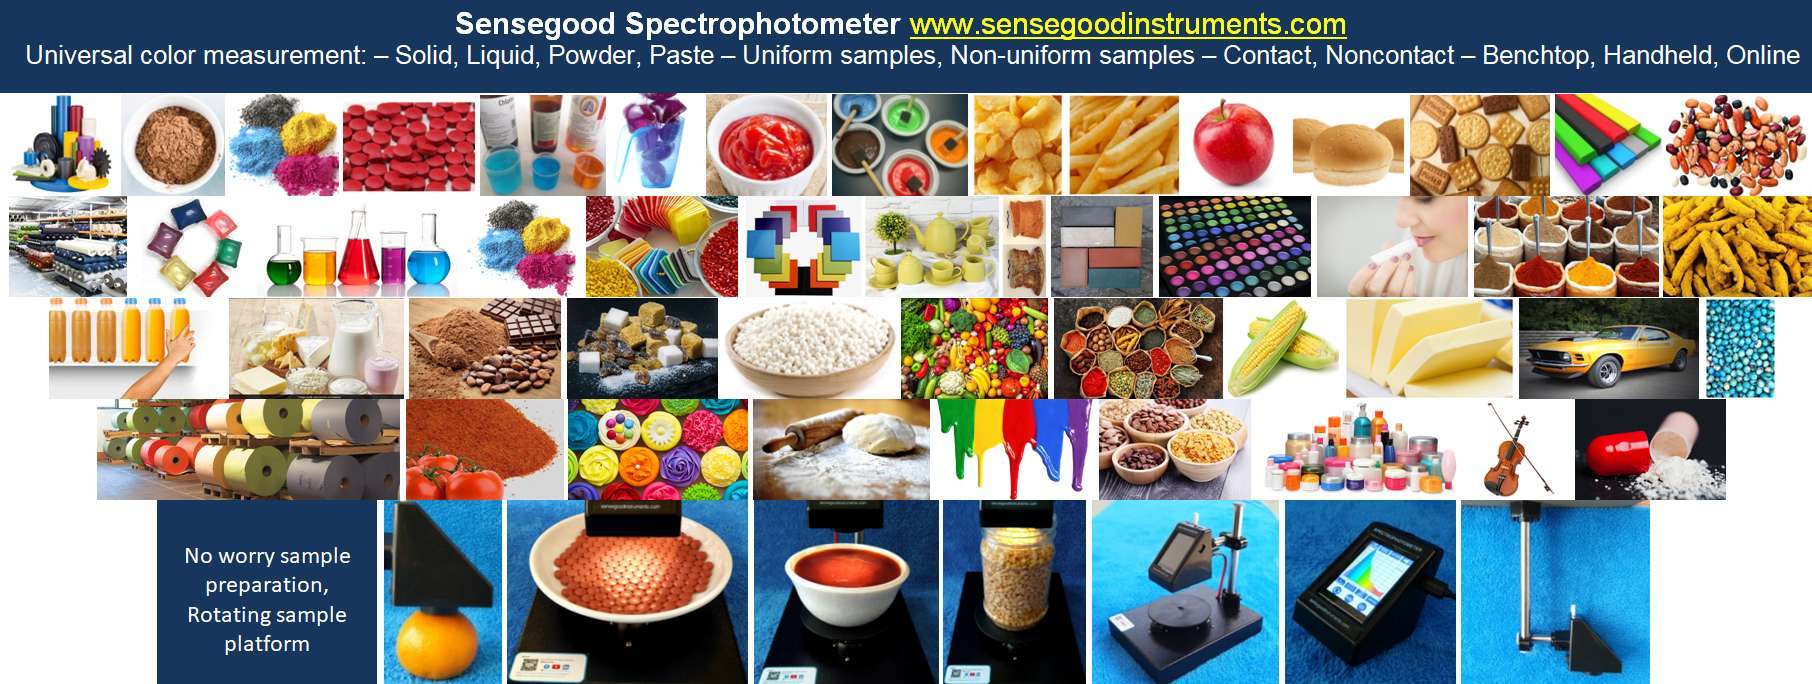 SenseGood Spectrophotometer